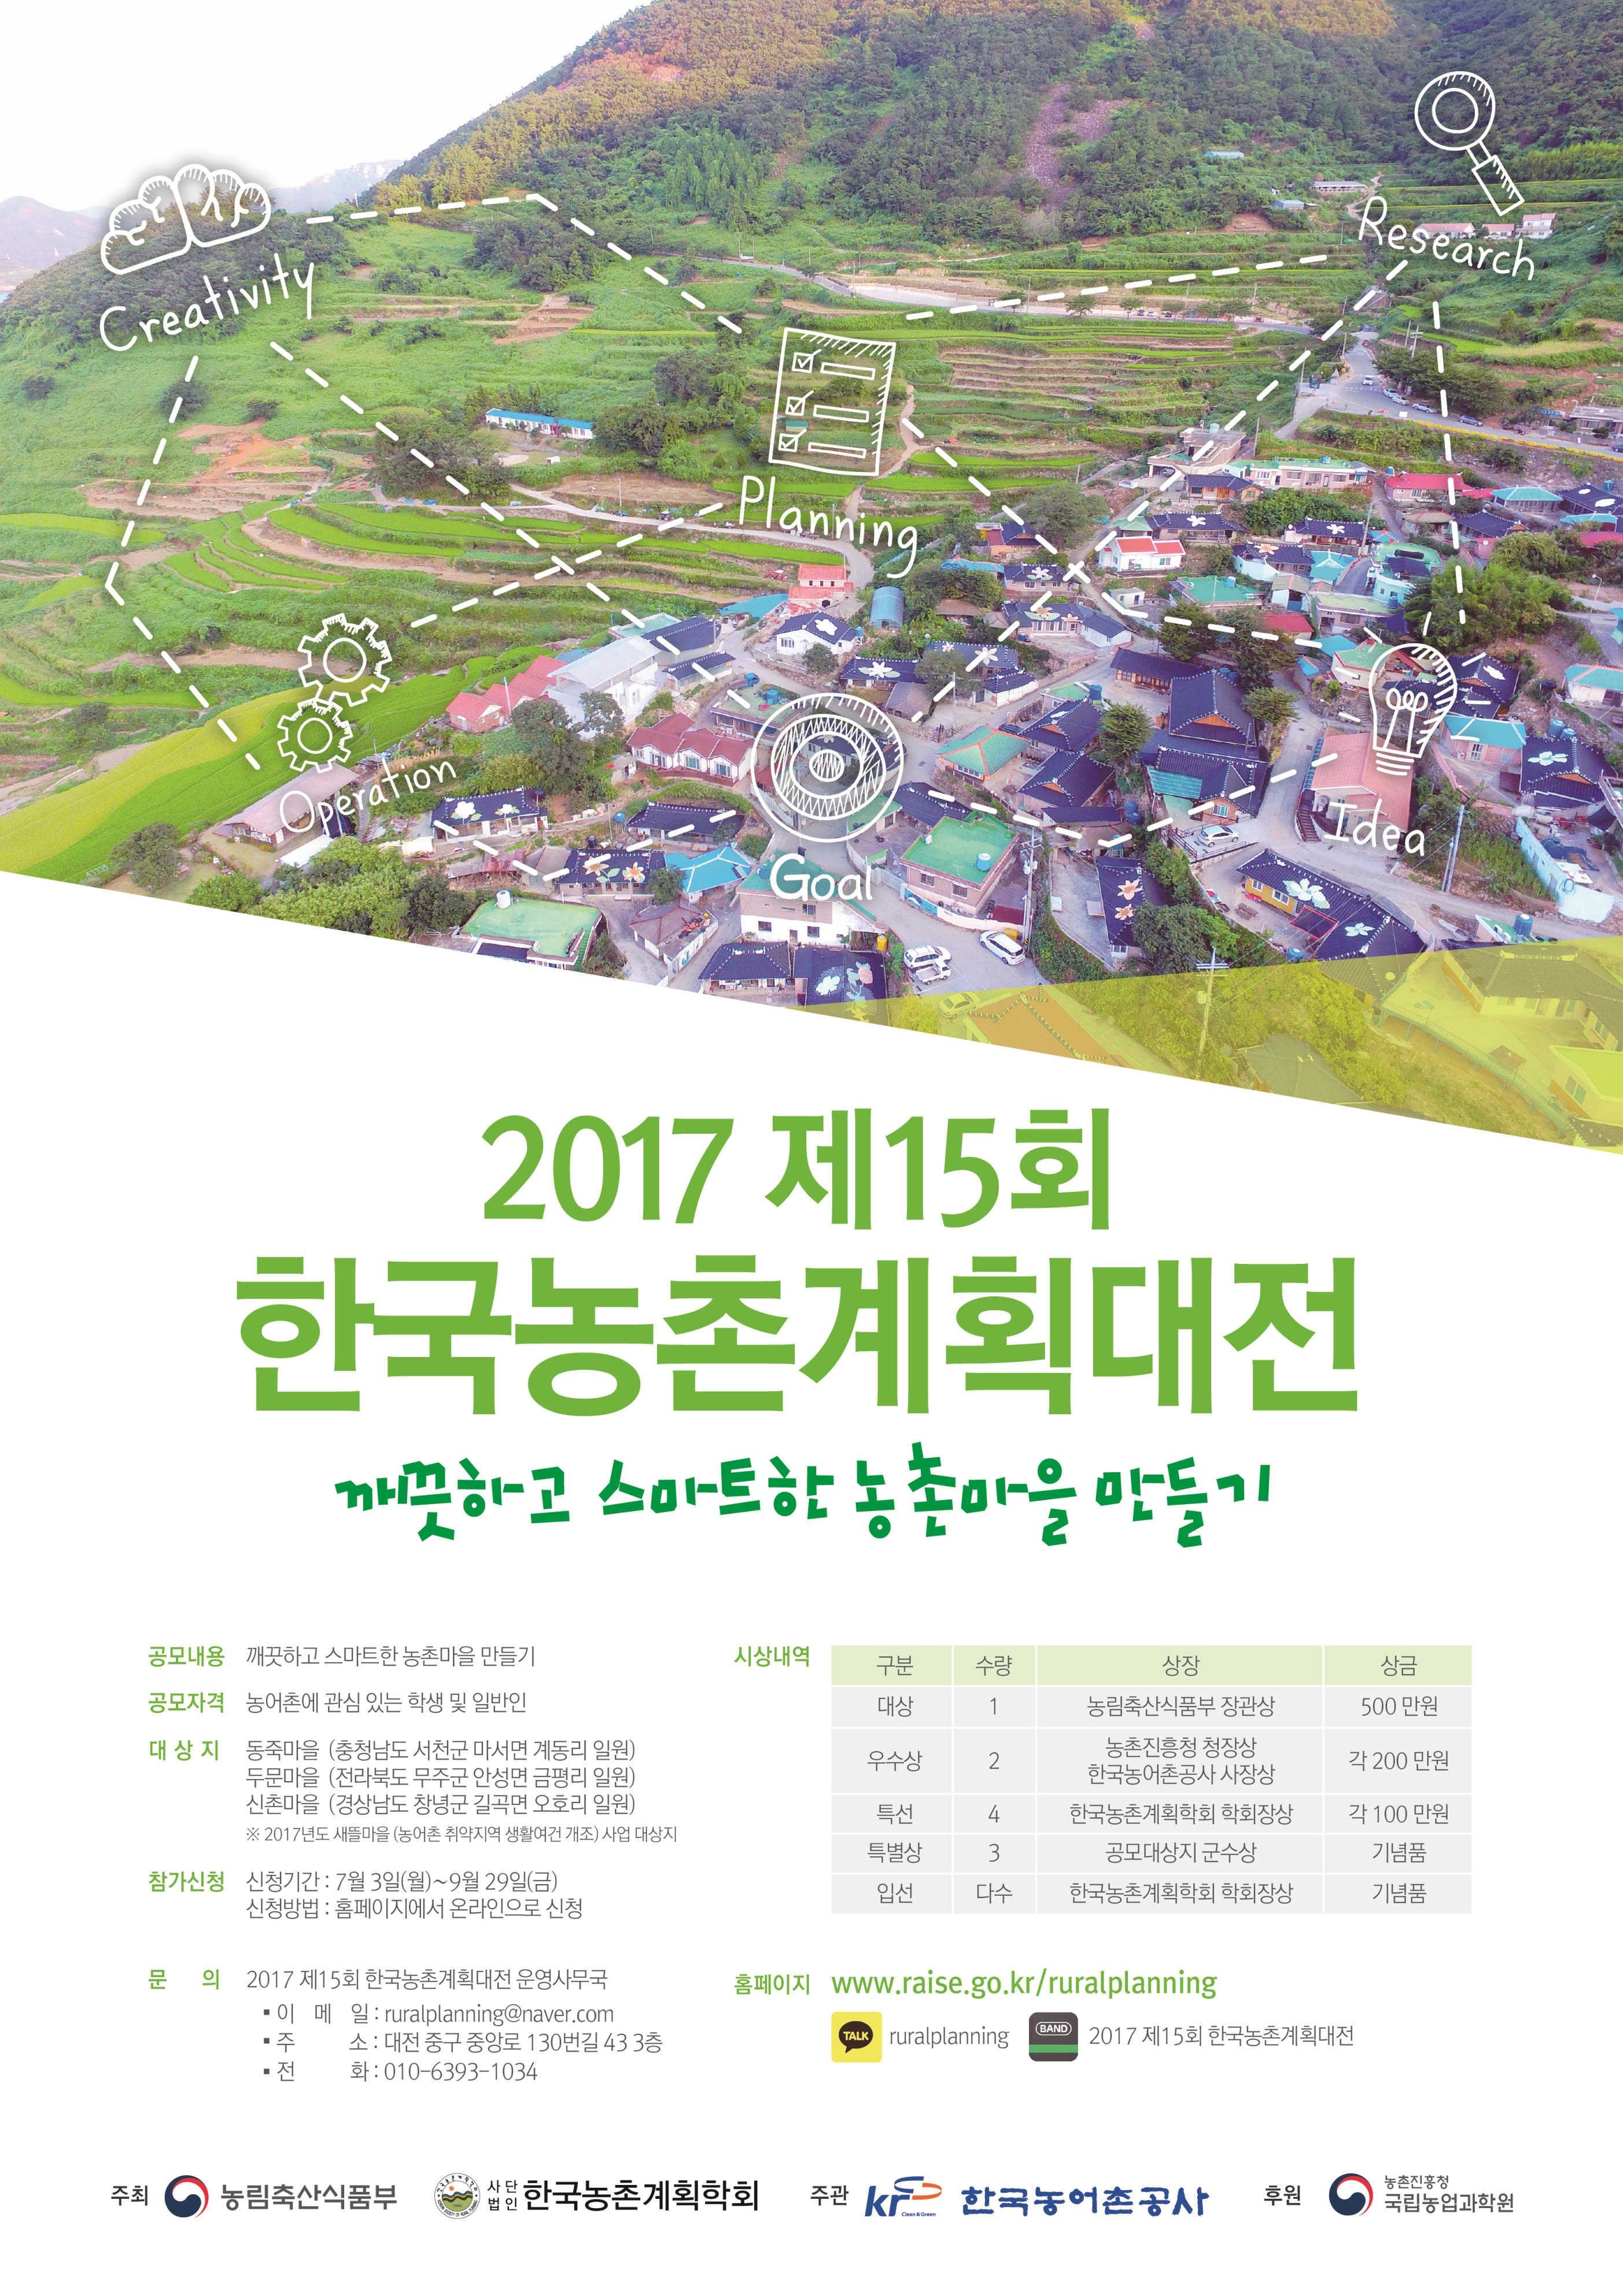 You are currently viewing [농림축산식품부] 한국농촌계획대전 “깨끗하고 스마트한 농촌마을 만들기”